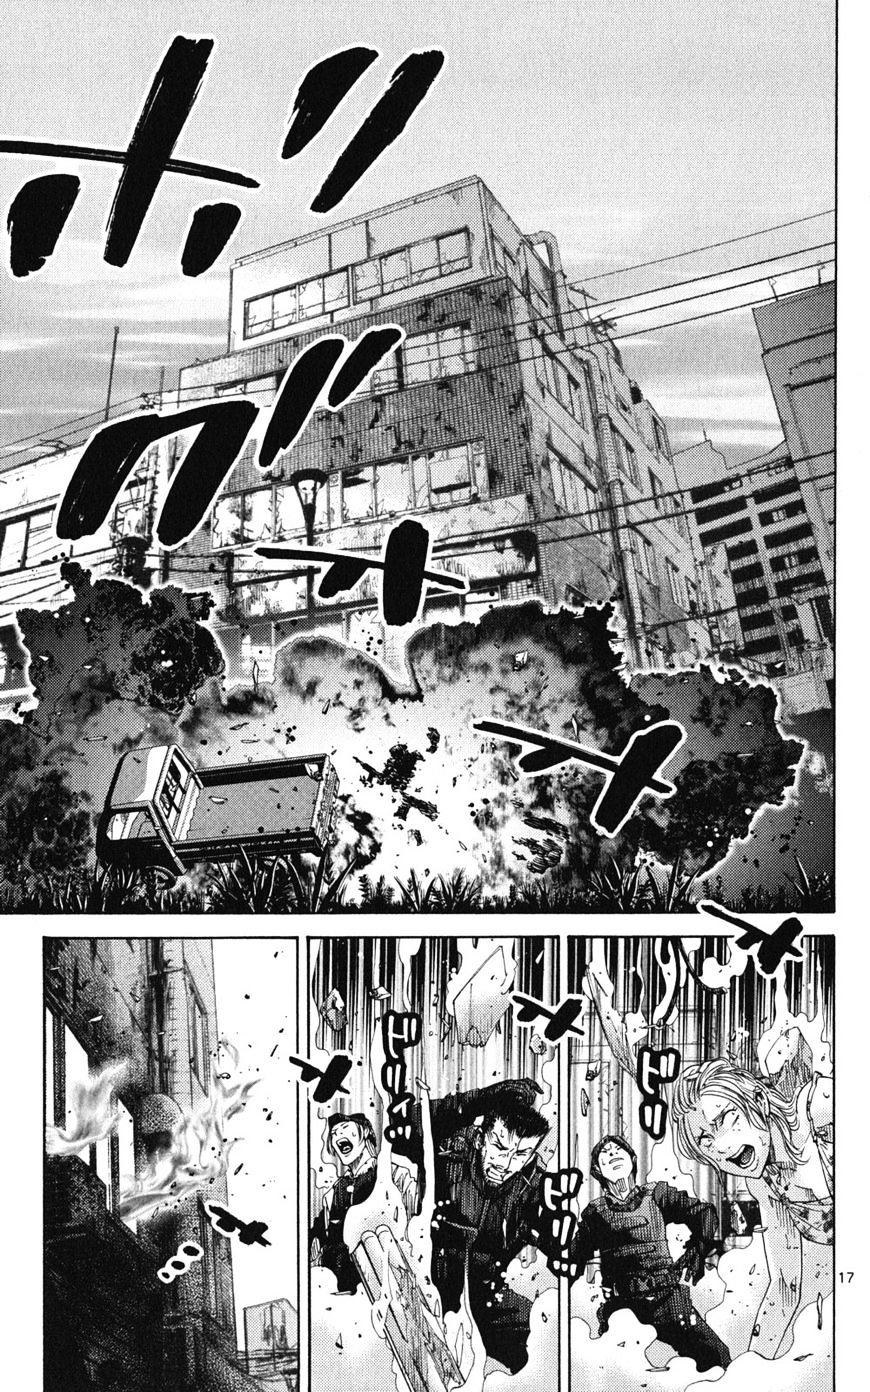 Imawa No Kuni No Alice Chapter 49.1 : Side Story 5 - King Of Spades (1) page 15 - Mangakakalot